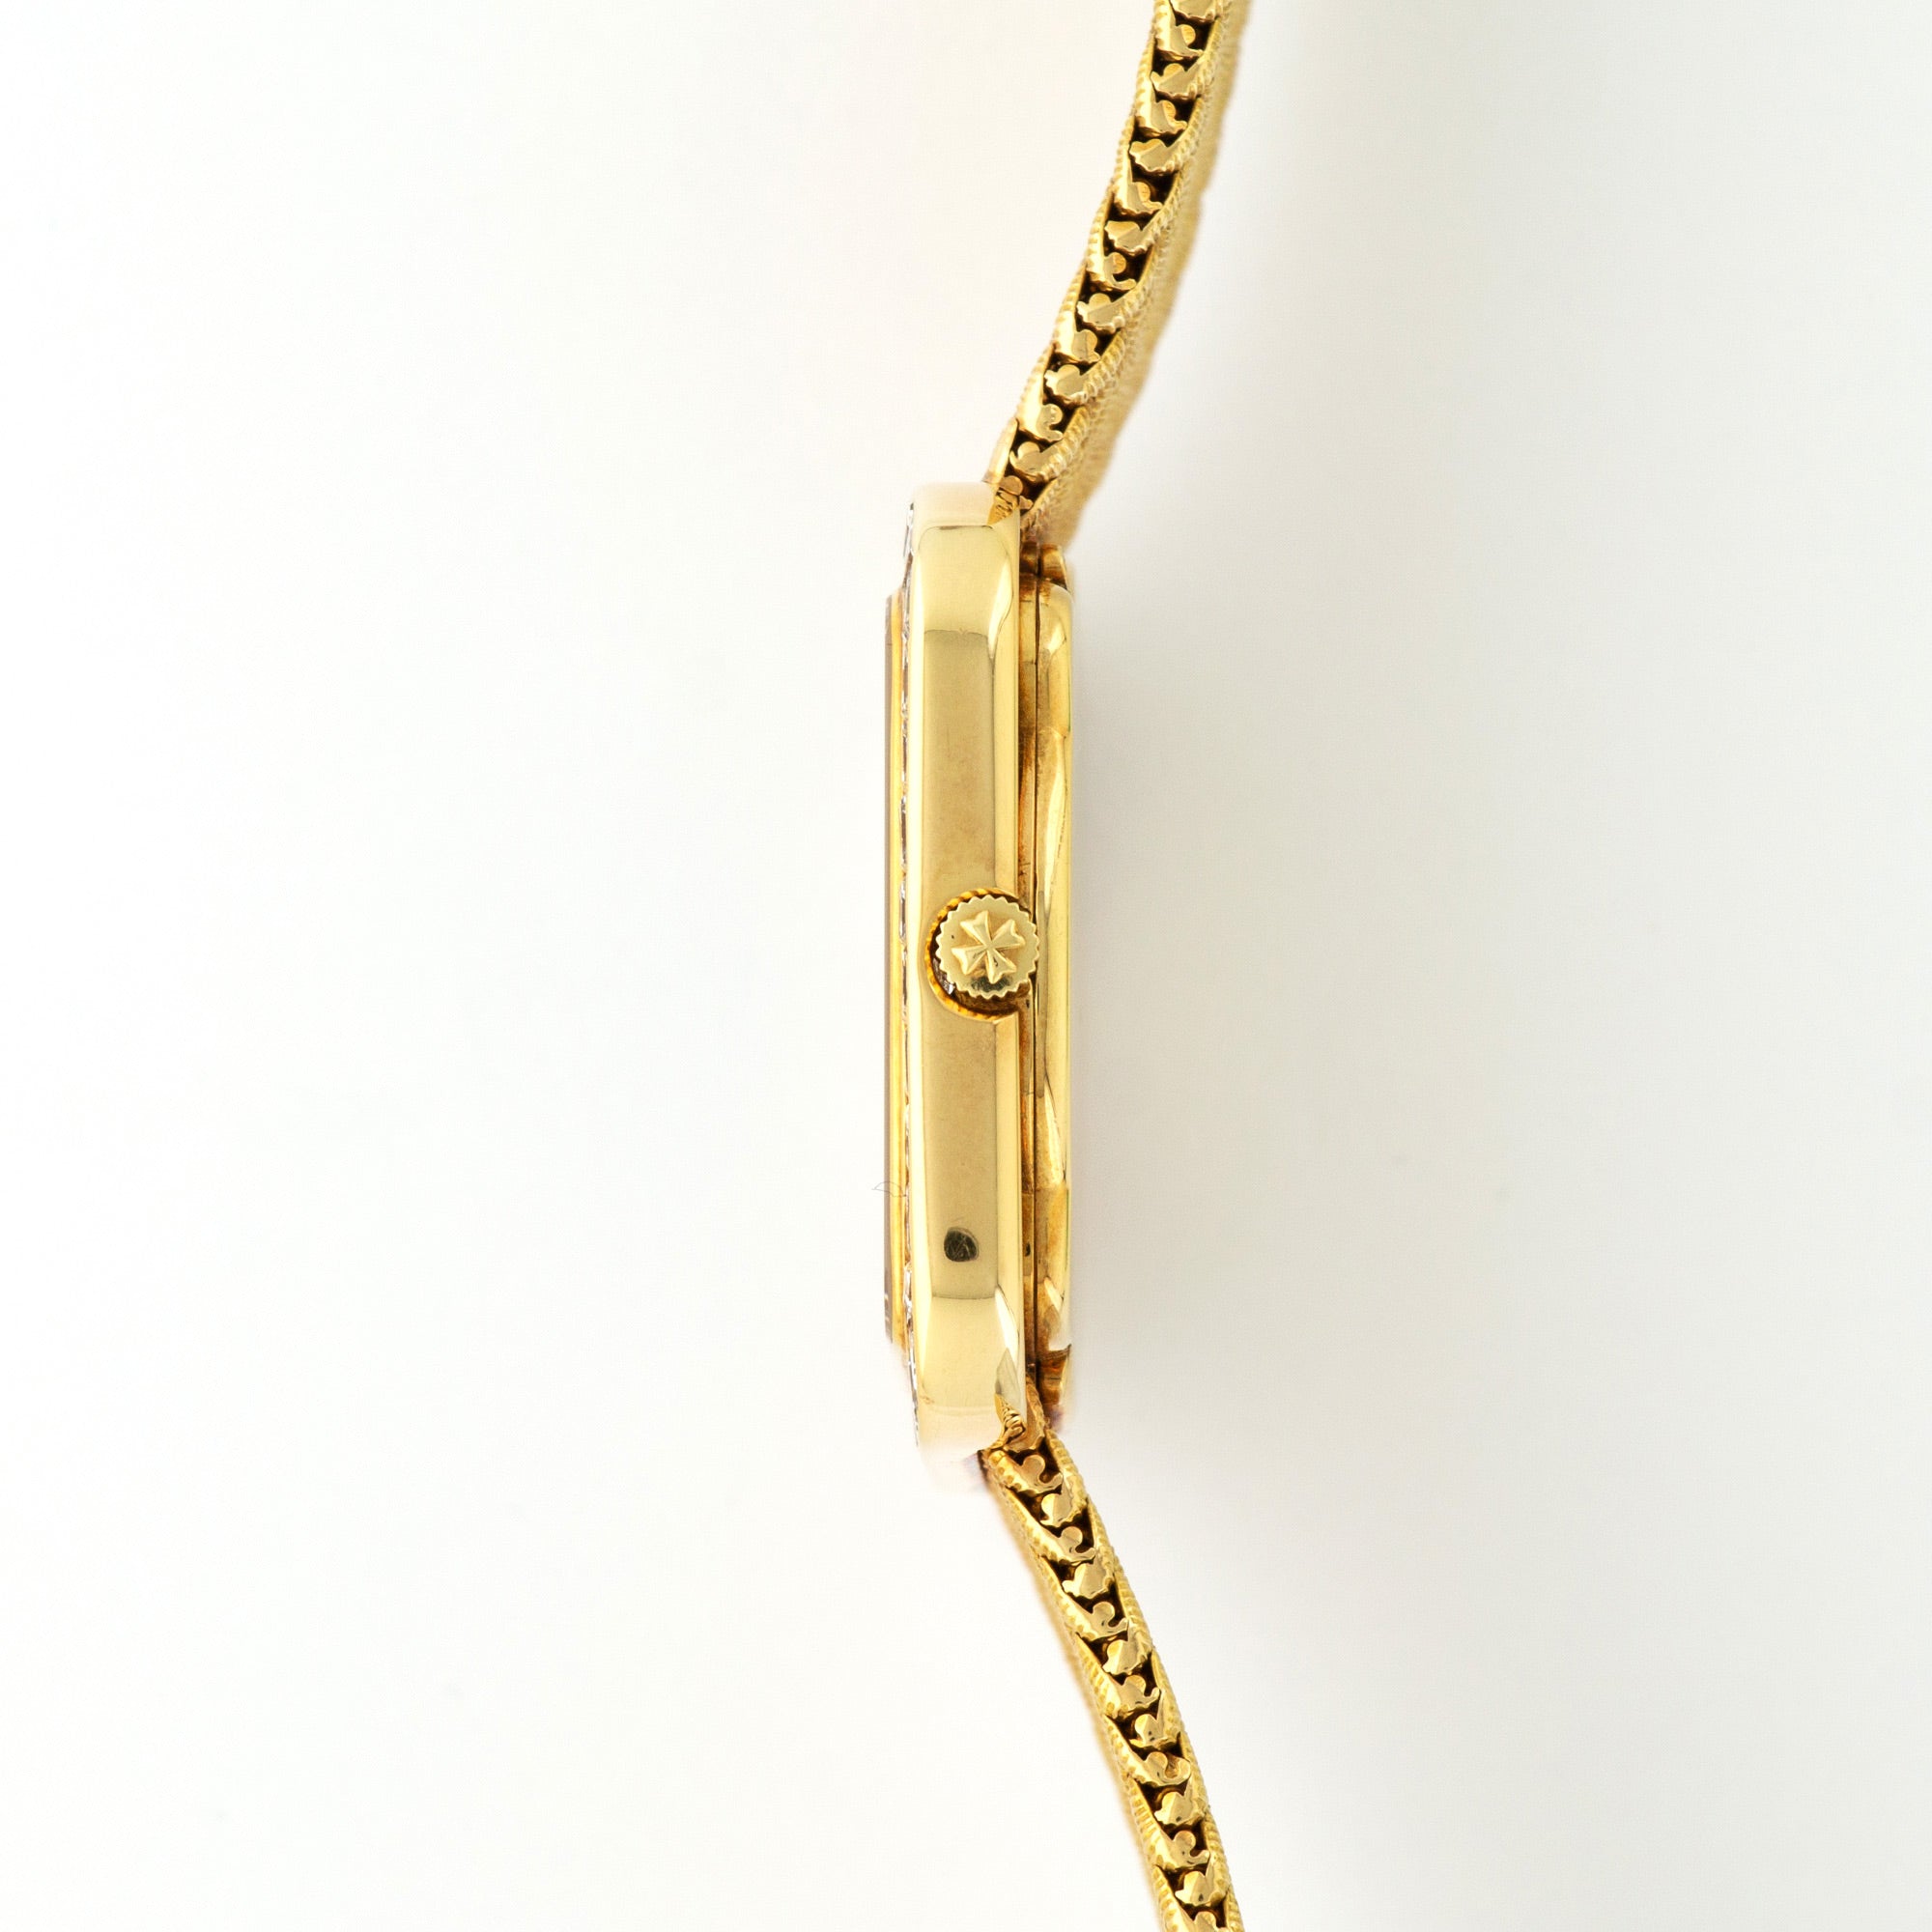 Vacheron Constantin - Vacheron Constantin Yellow Gold Baguette Diamond Watch - The Keystone Watches